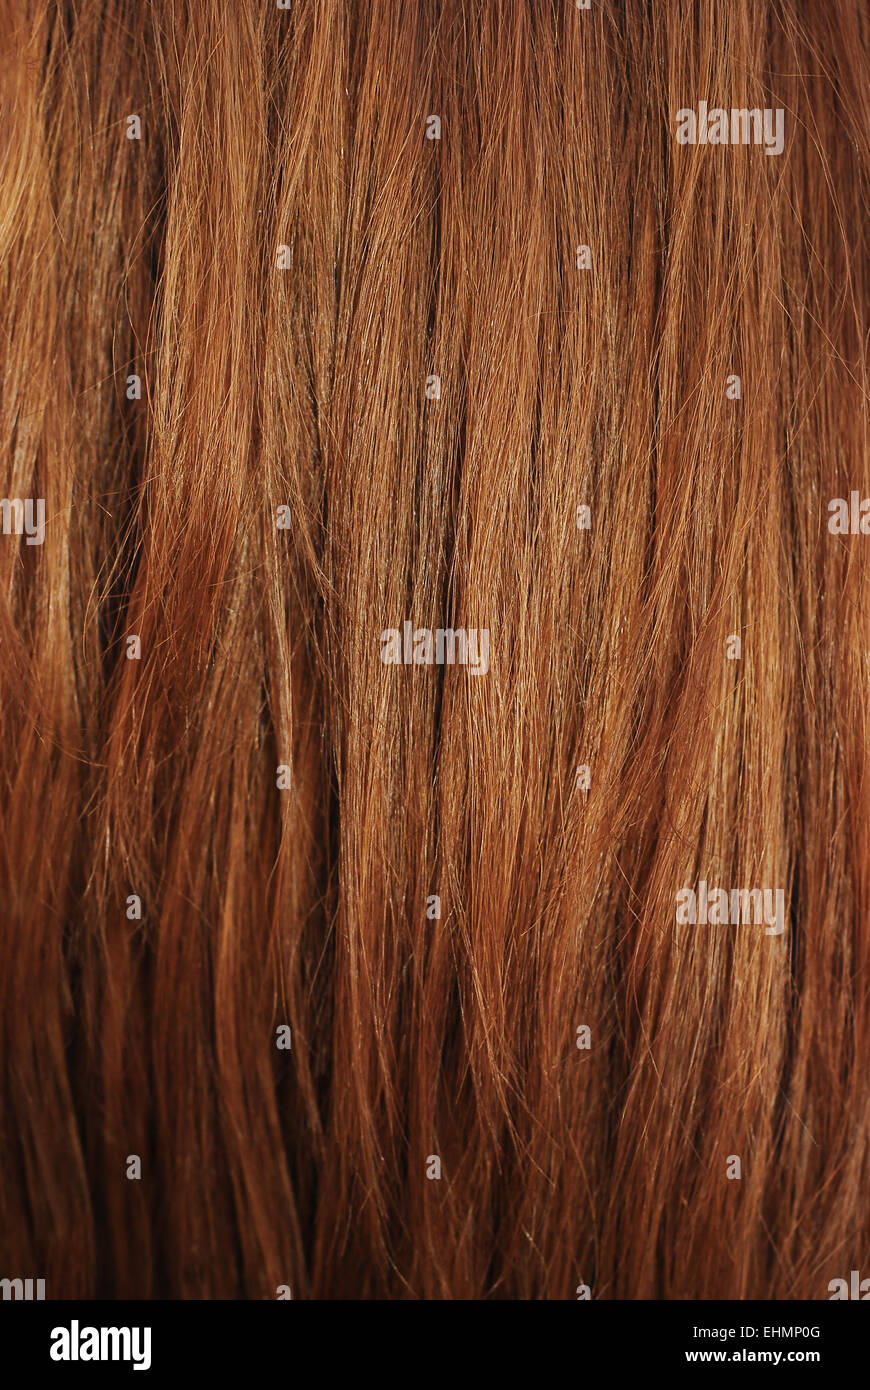 hair background texture closeup detail Stock Photo